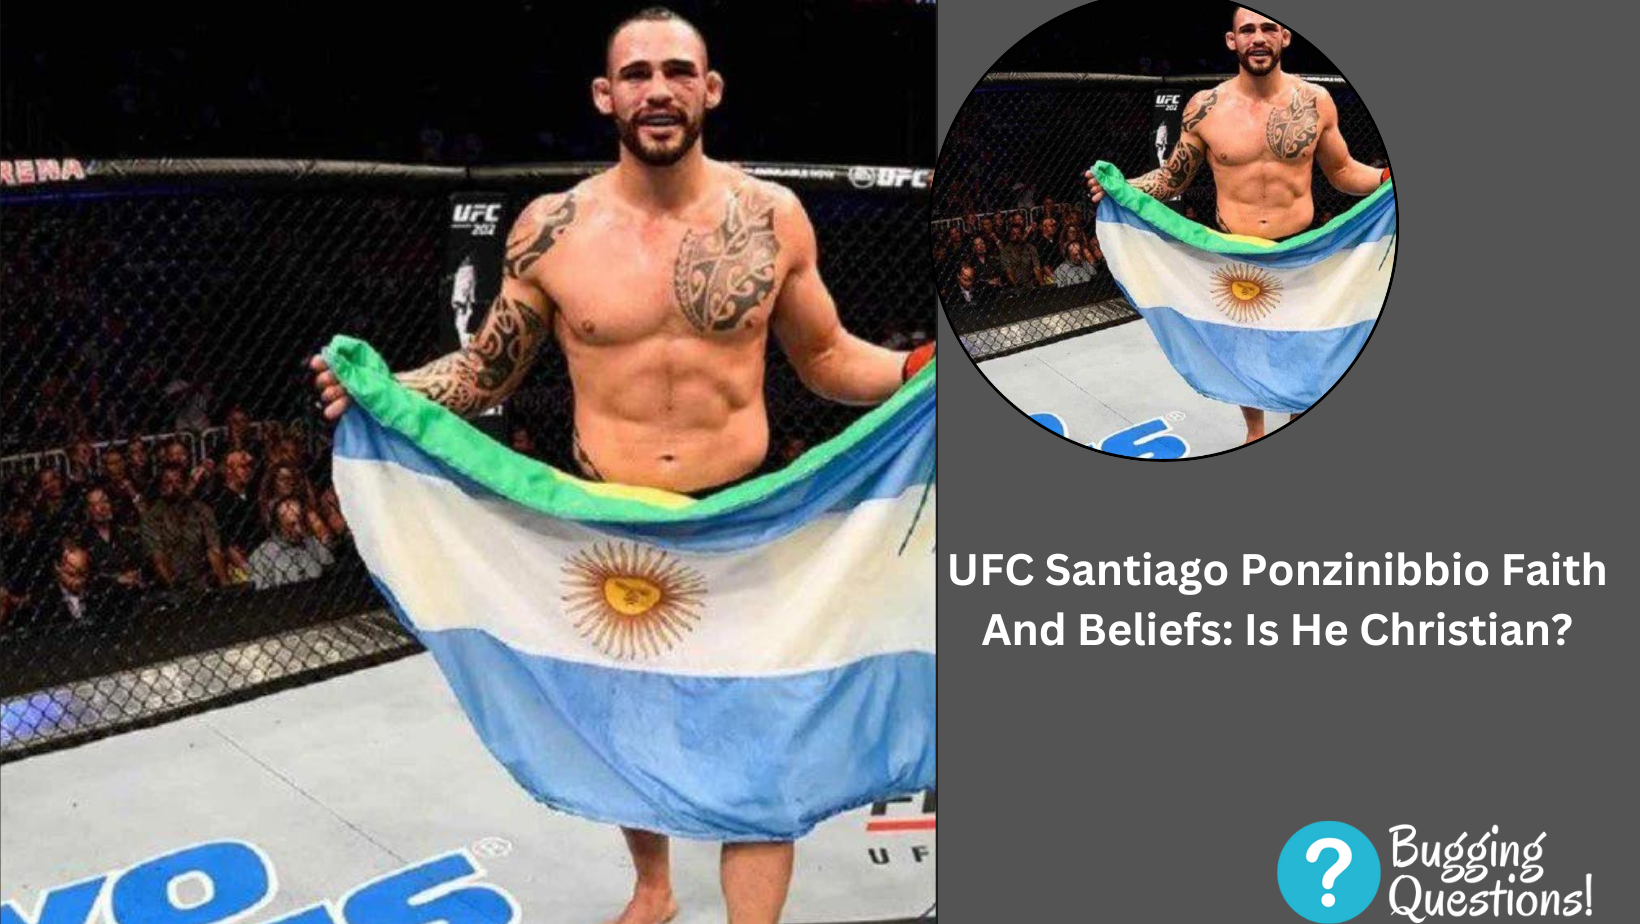 UFC Santiago Ponzinibbio Faith And Beliefs: Is He Christian?